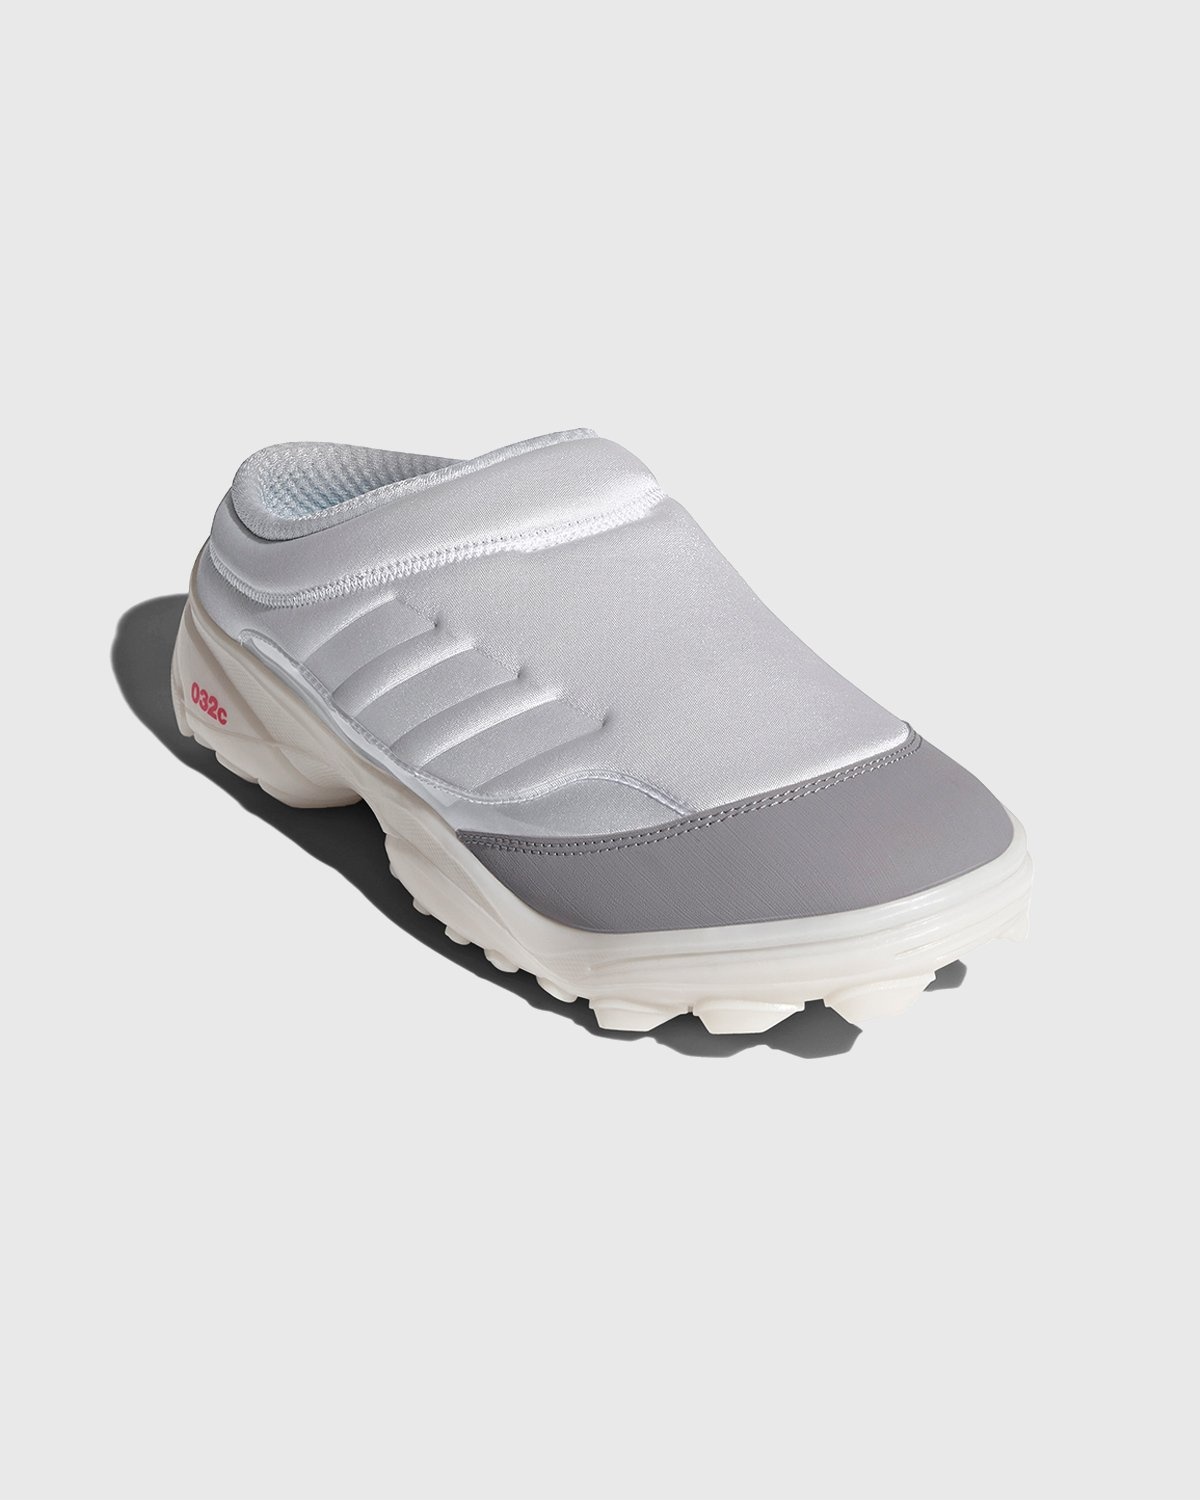 Adidas x 032c – GSG Mule Greone - Shoes - White - Image 2